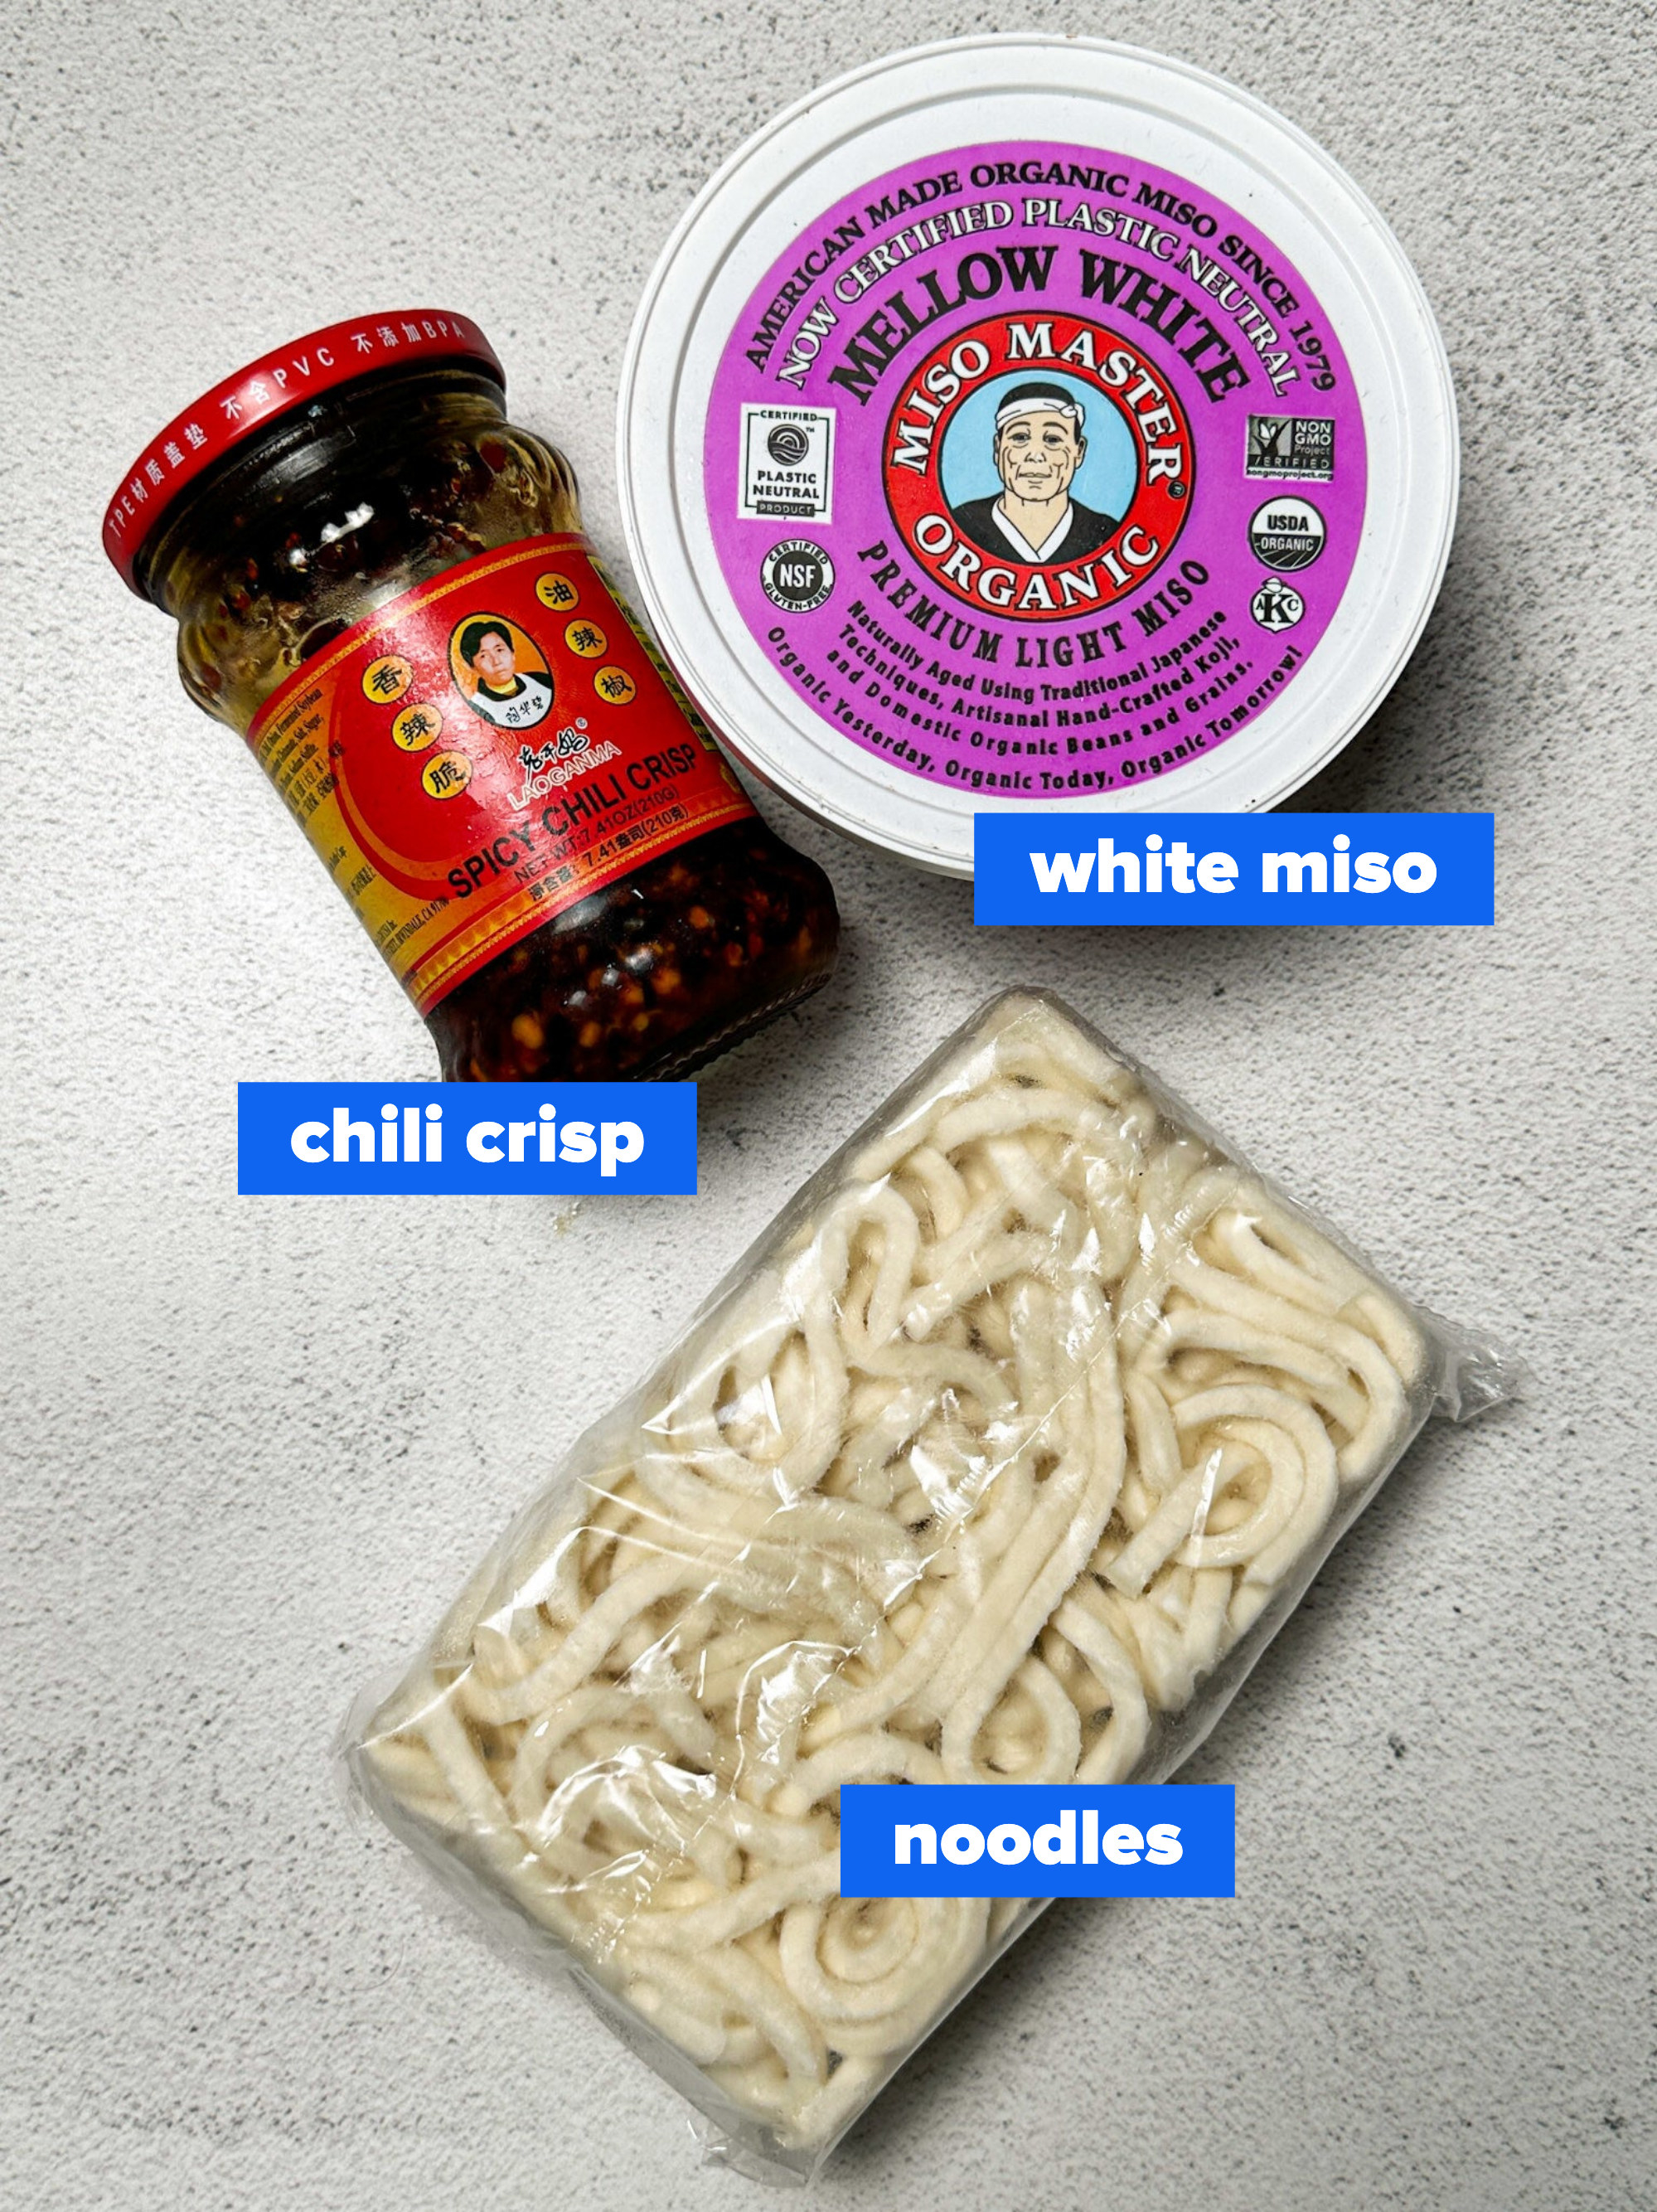 the ingredients: white miso, chili crisp, frozen udon noodles